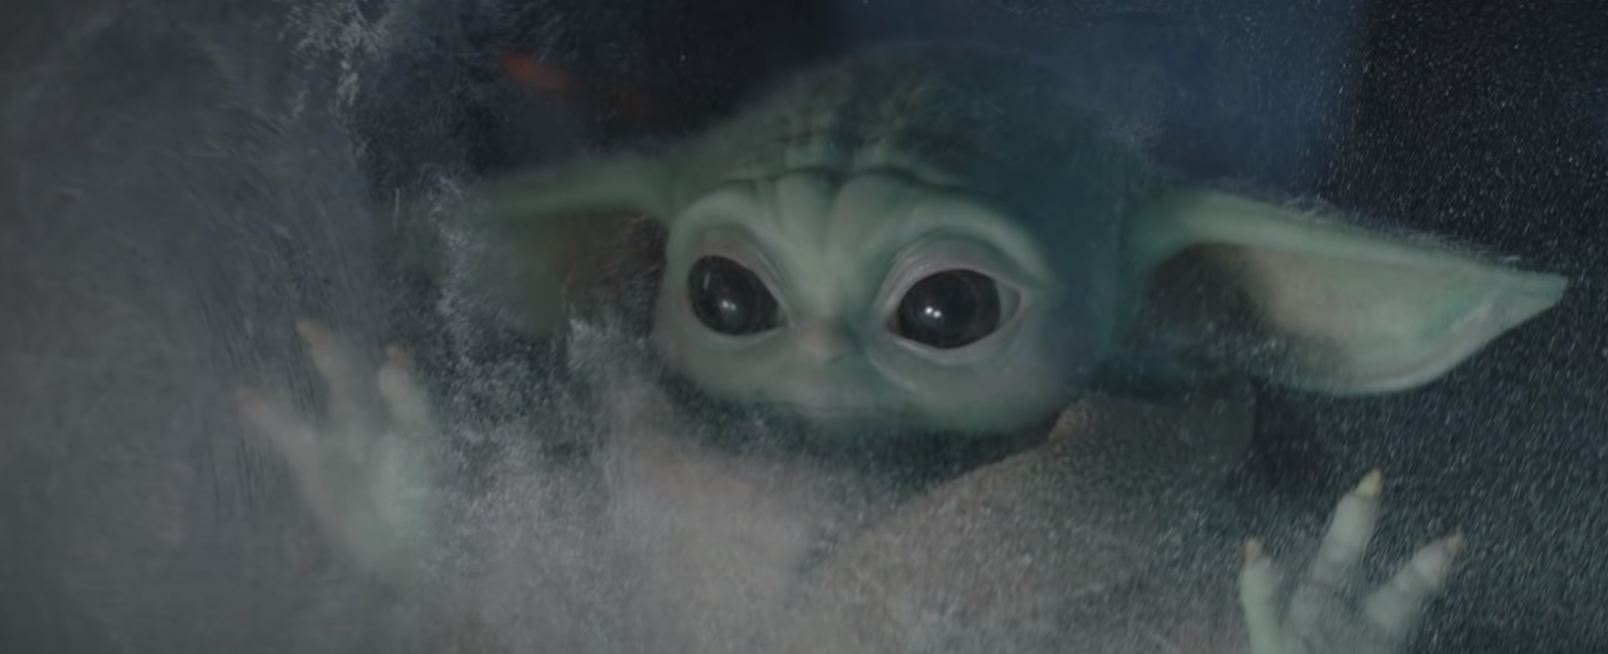 Baby Yoda eyeing eggs in The Mandalorian Chapter 10